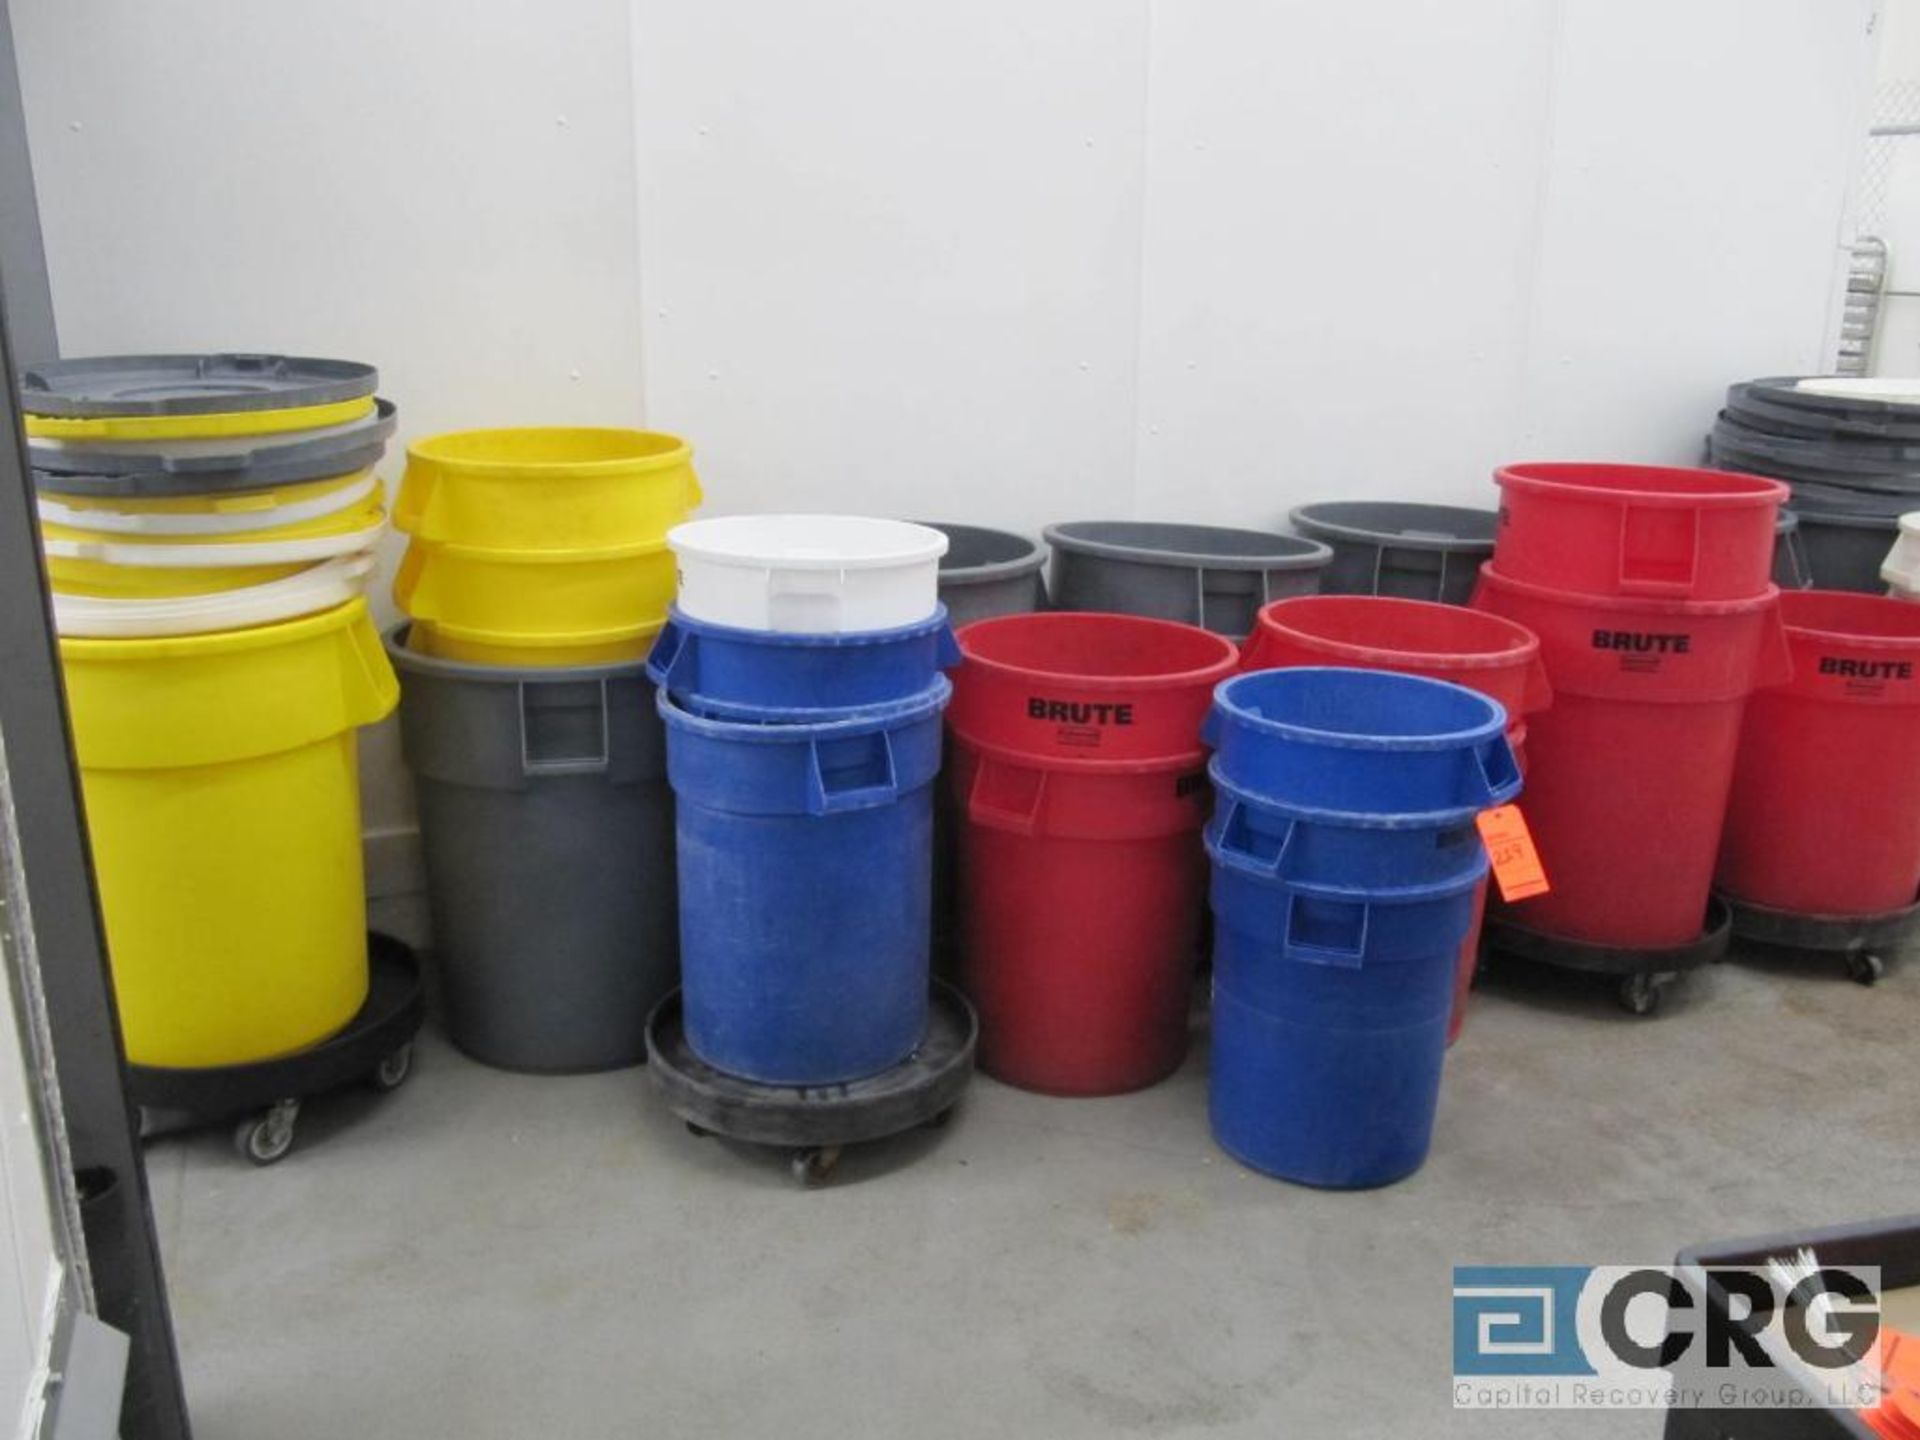 Lot consisting of: plastic trash cans, plastic bins, plastic lids, plastic tub 45" X 37" X 21" deep,